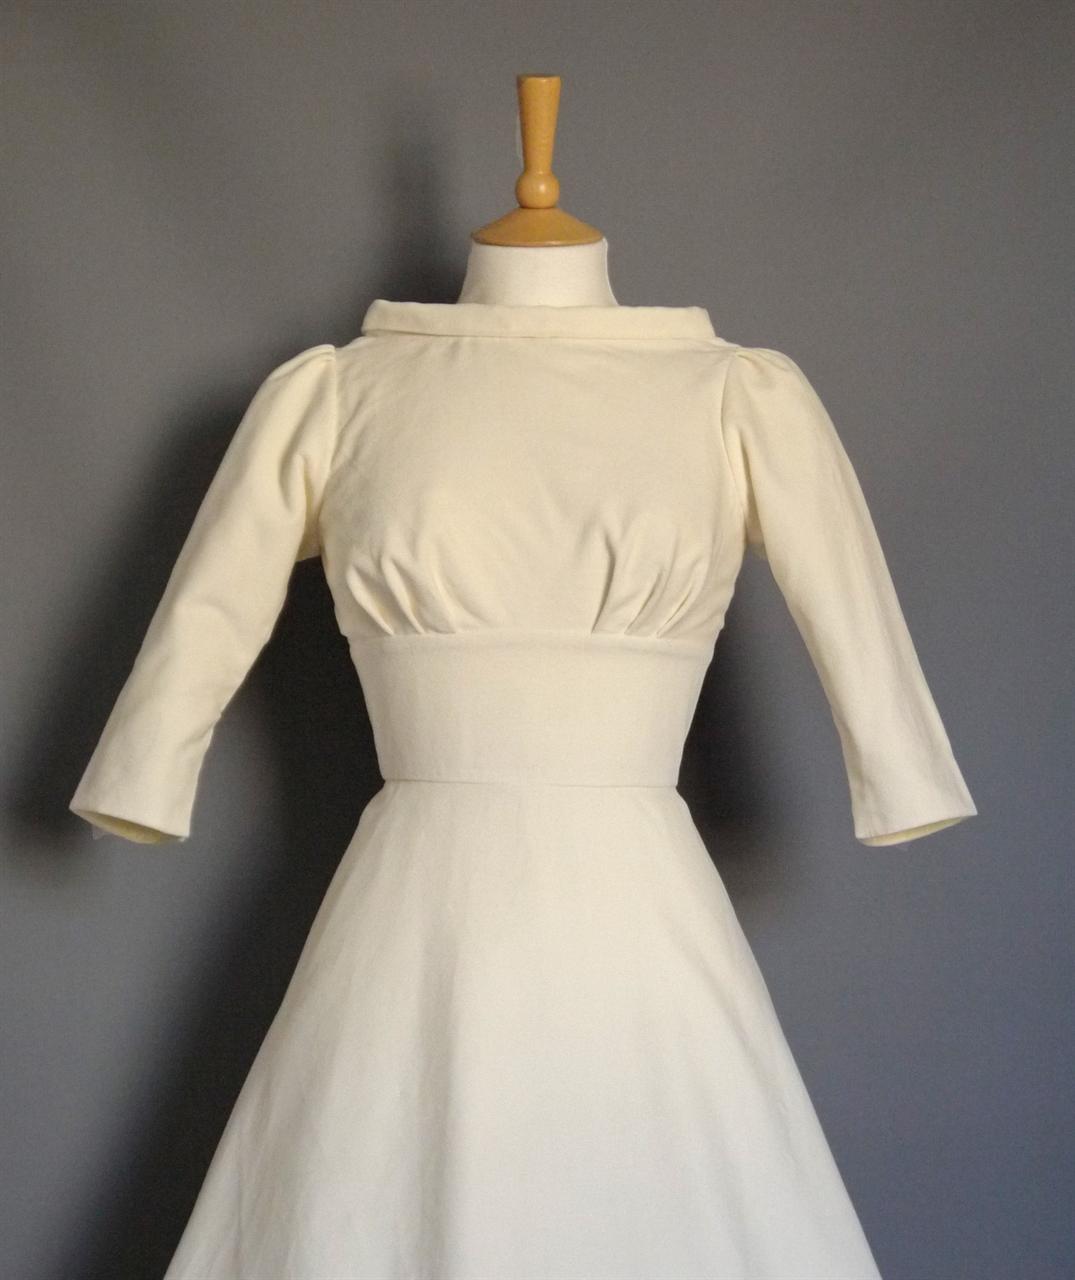 Ivory Velvet Wedding Dress with Fifties Collar, Sleeves & Half Circle Skirt